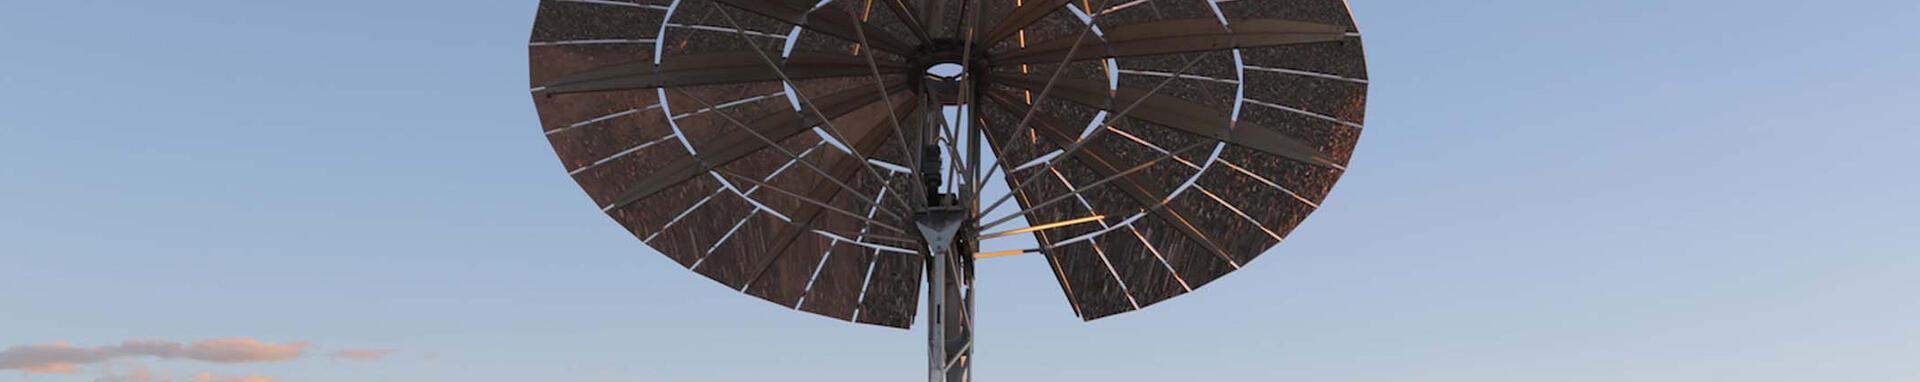 CIF Action NOOR Concentrated Solar Power Plant, Morocco. Copyright CIF 2018